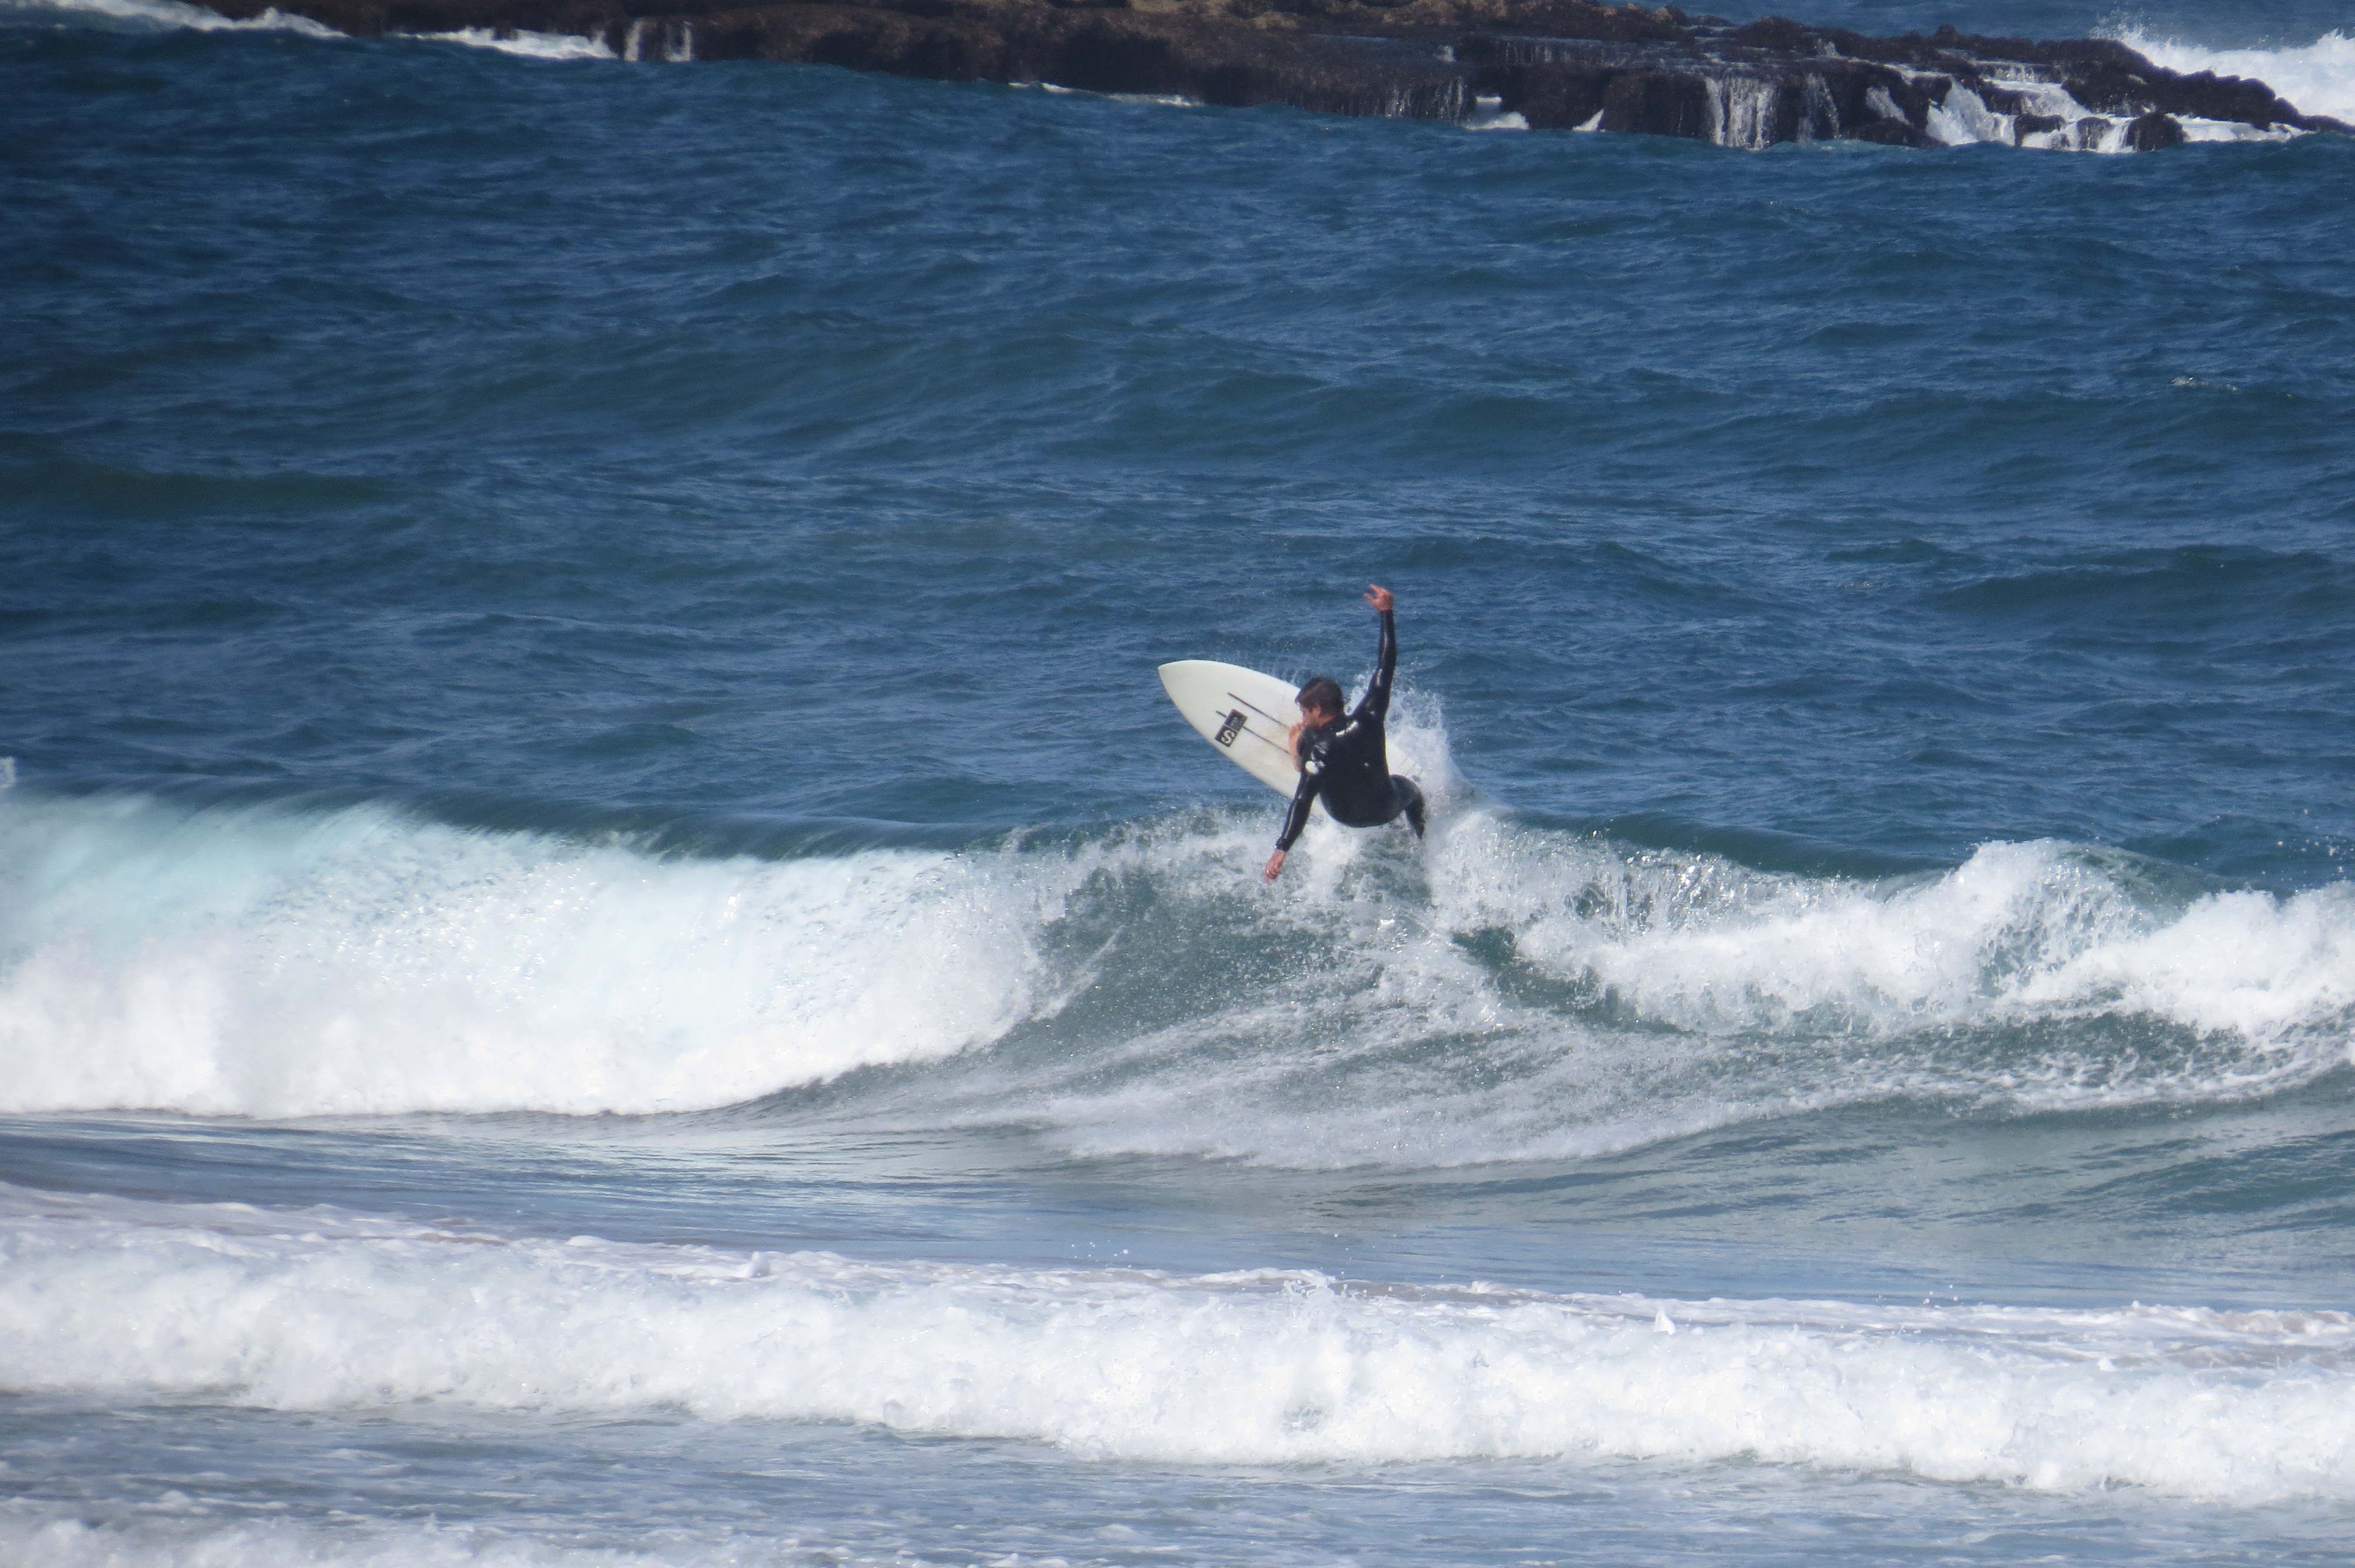 amado good surfer